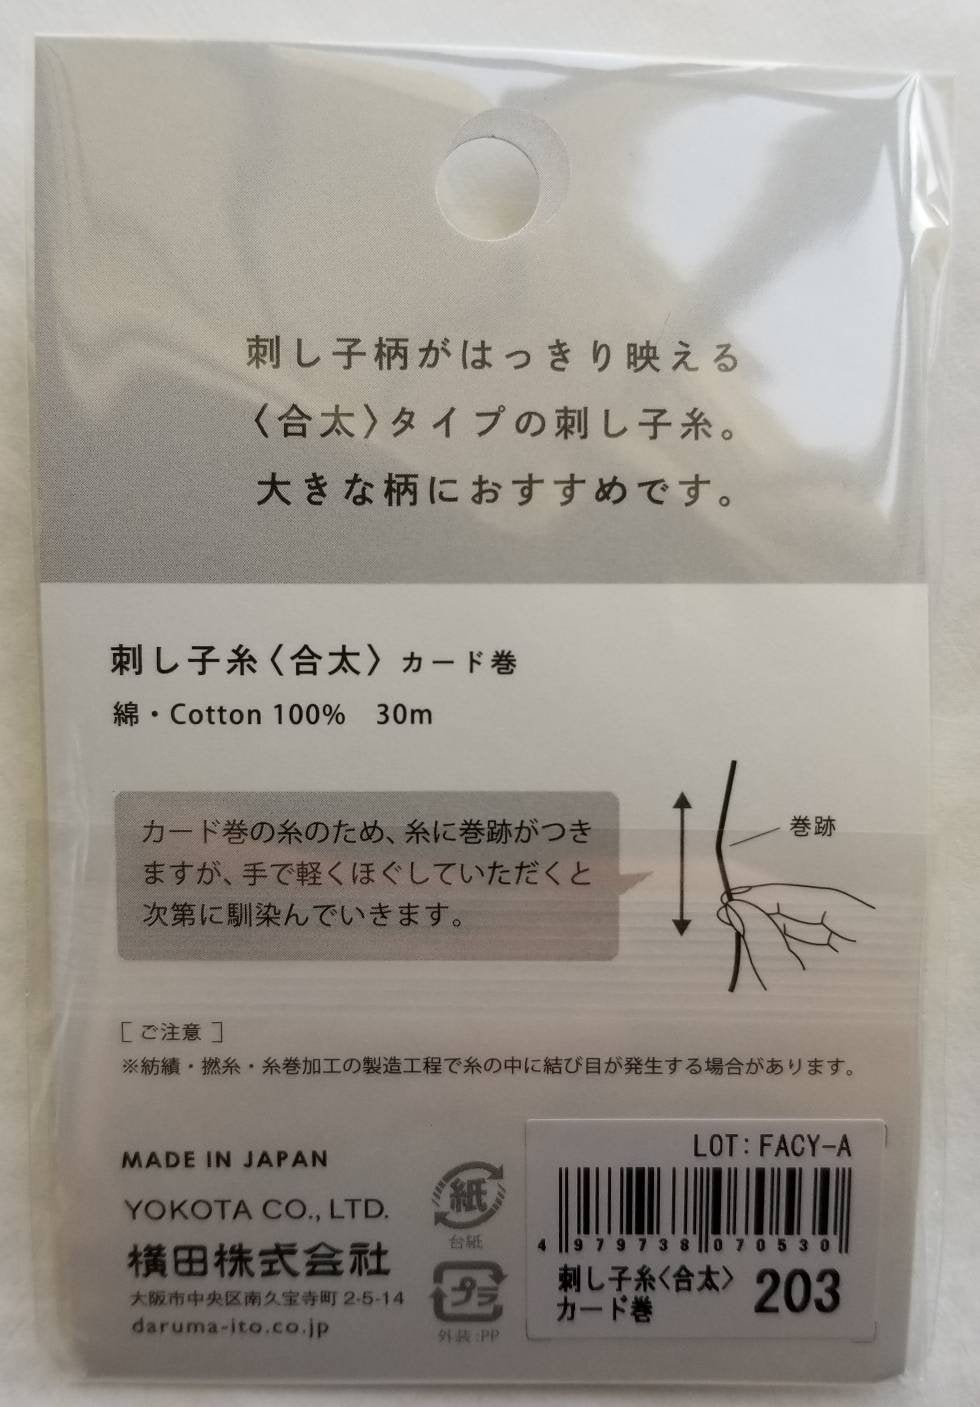 Daruma #203 LEMON YELLOW Japanese Cotton SASHIKO thread 30 meter card 20/6